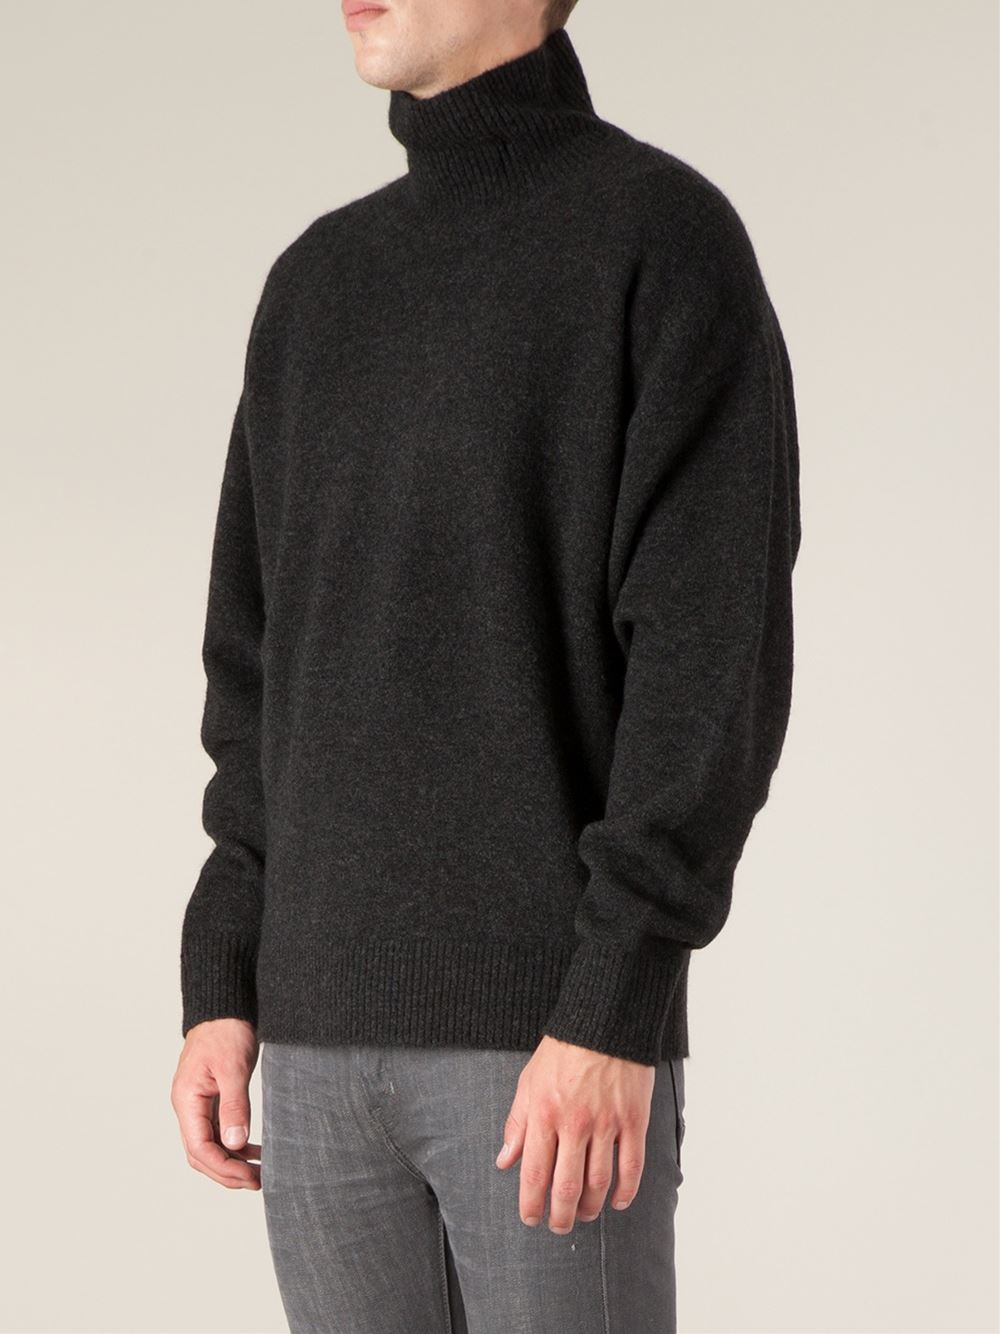 Balenciaga Knit Sweater in Gray for Men - Lyst